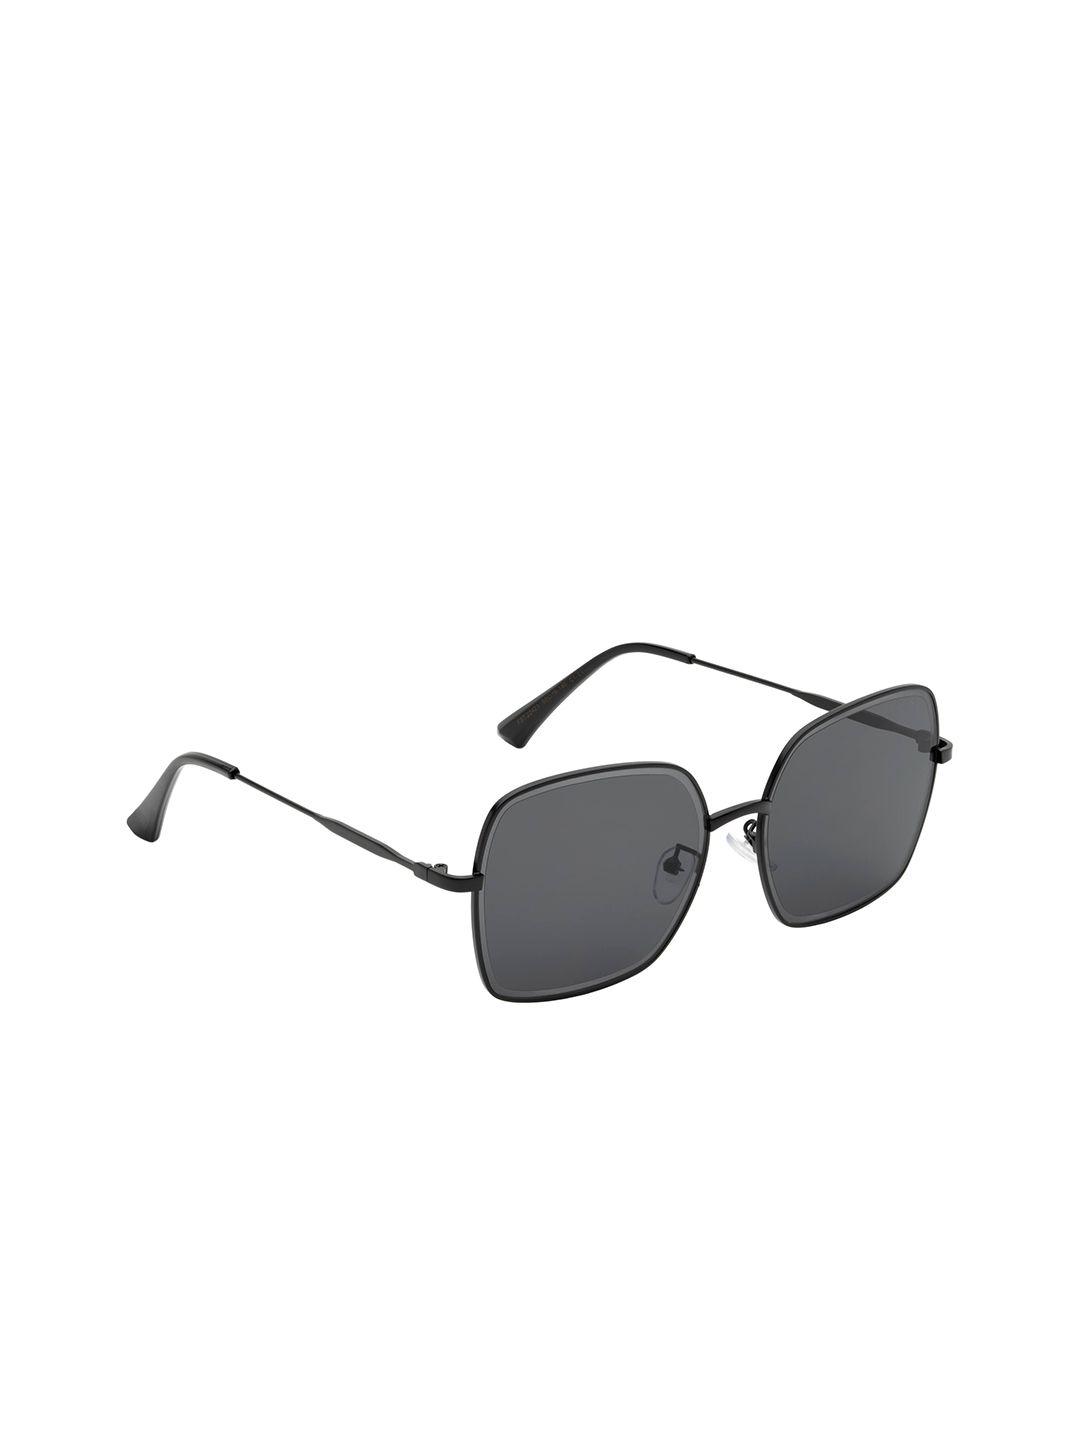 femina flaunt women grey lens & black square sunglasses with uv protected lens